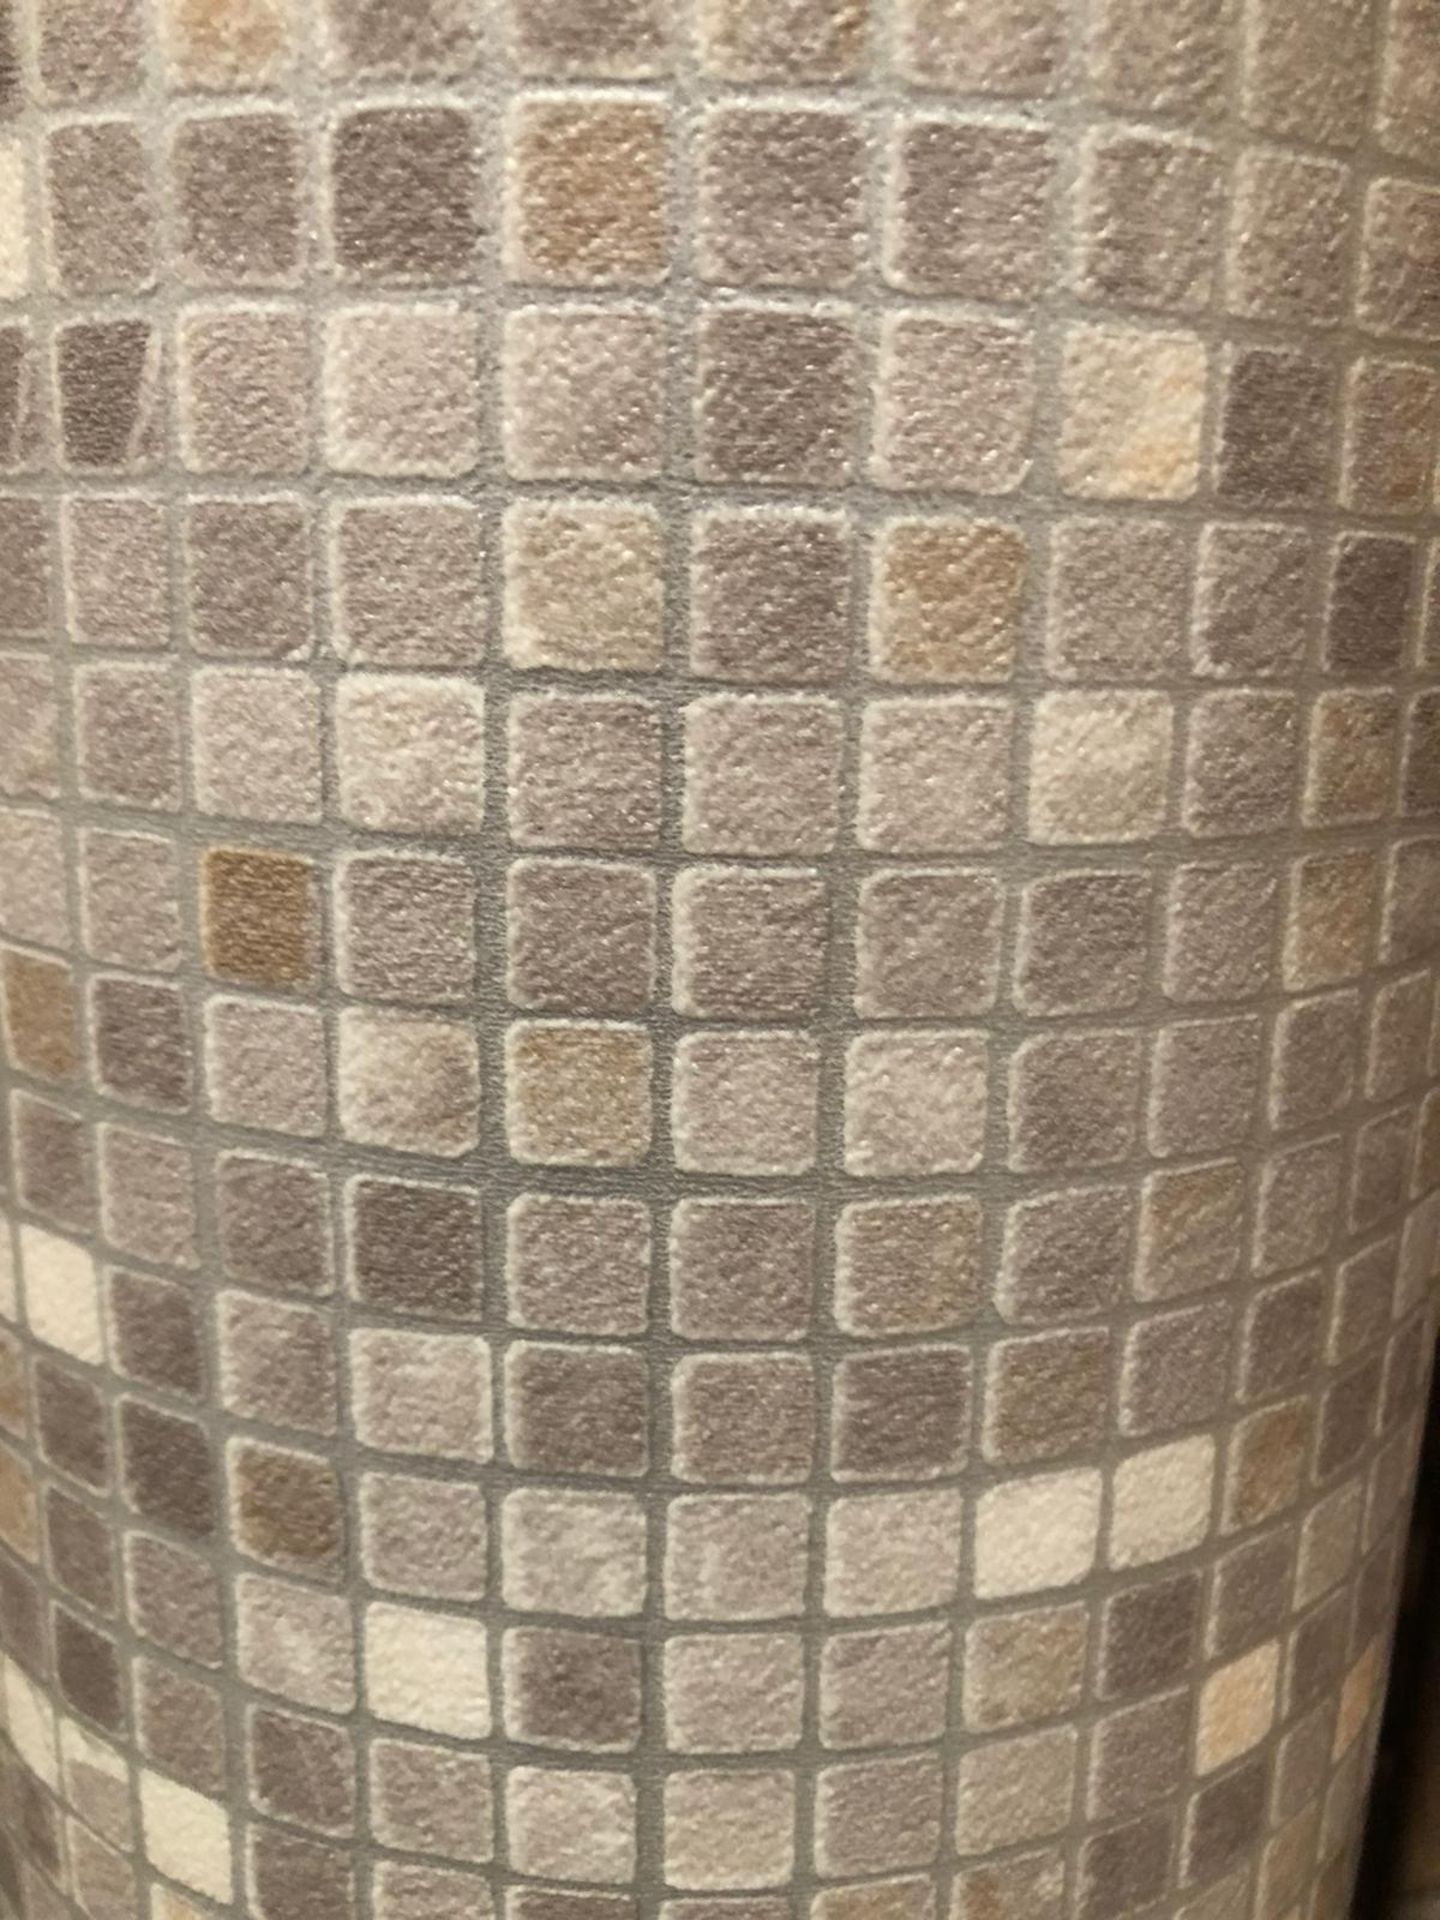 Mosaic tile cushion floor 3.5m x 3m(11ft 3in x 9ft 9in ) code 2c39